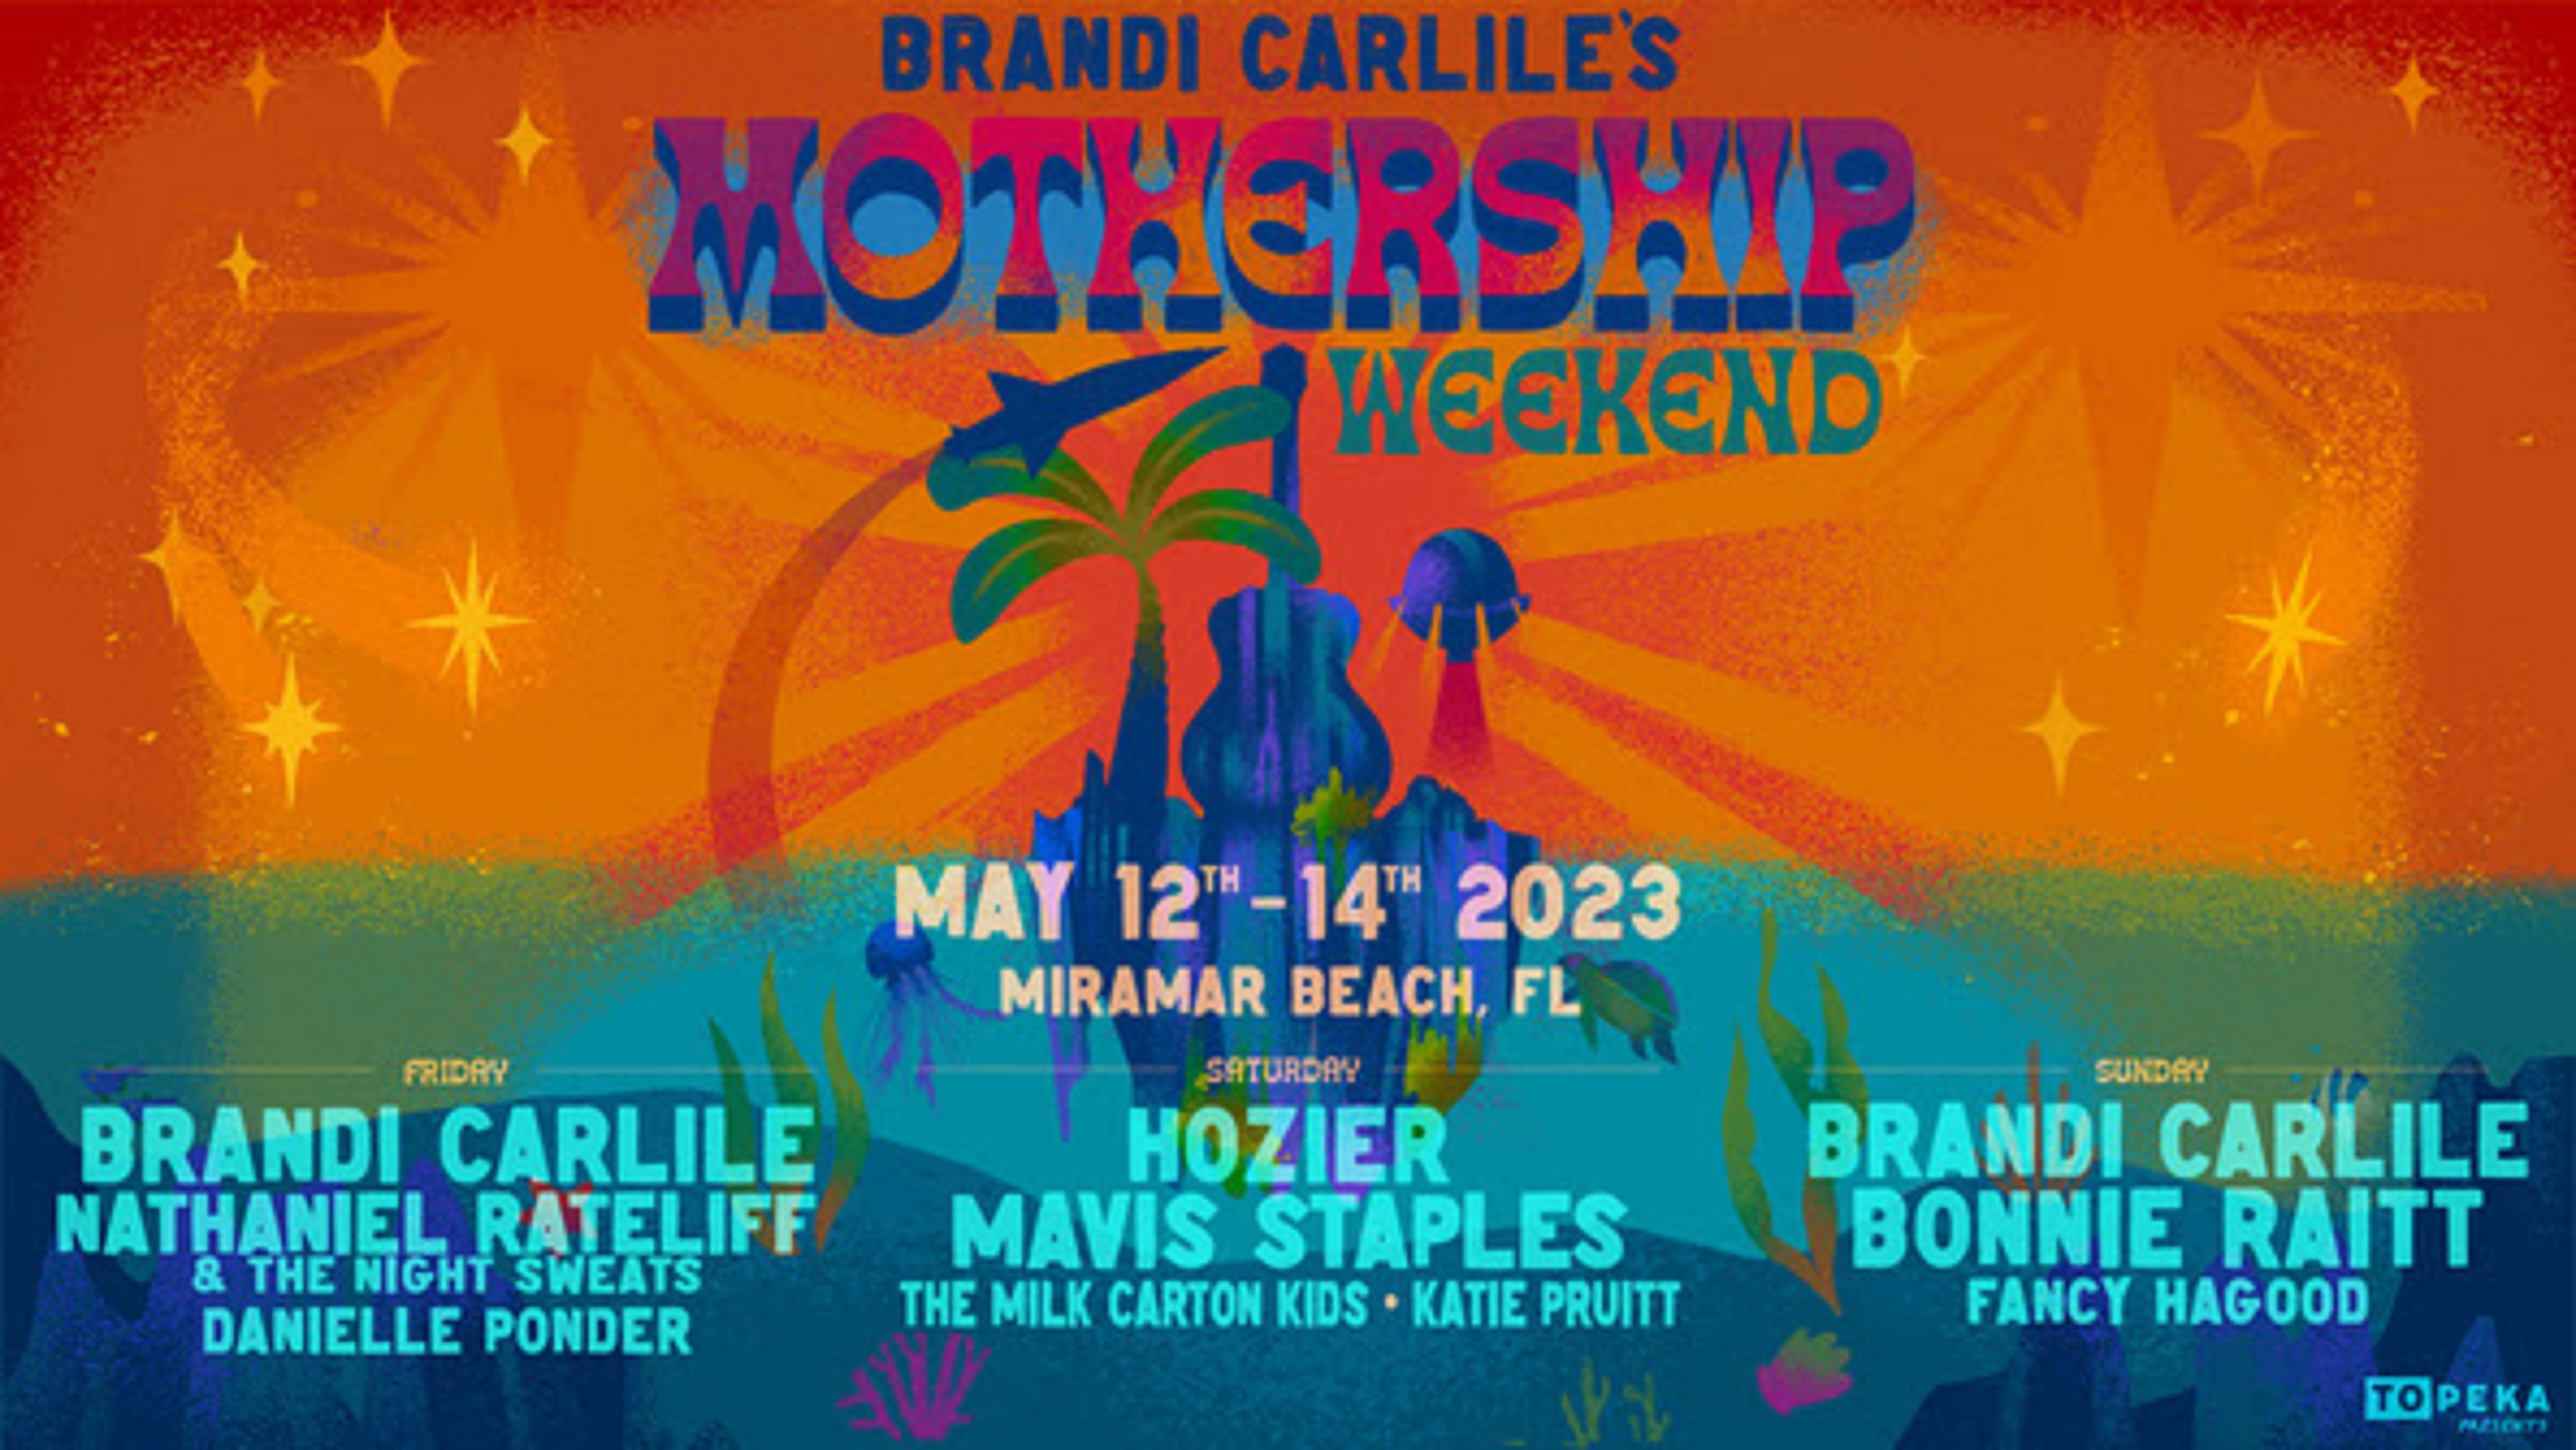 “Brandi Carlile’s Mothership Weekend” to take place May 12-14 in Miramar Beach, FL